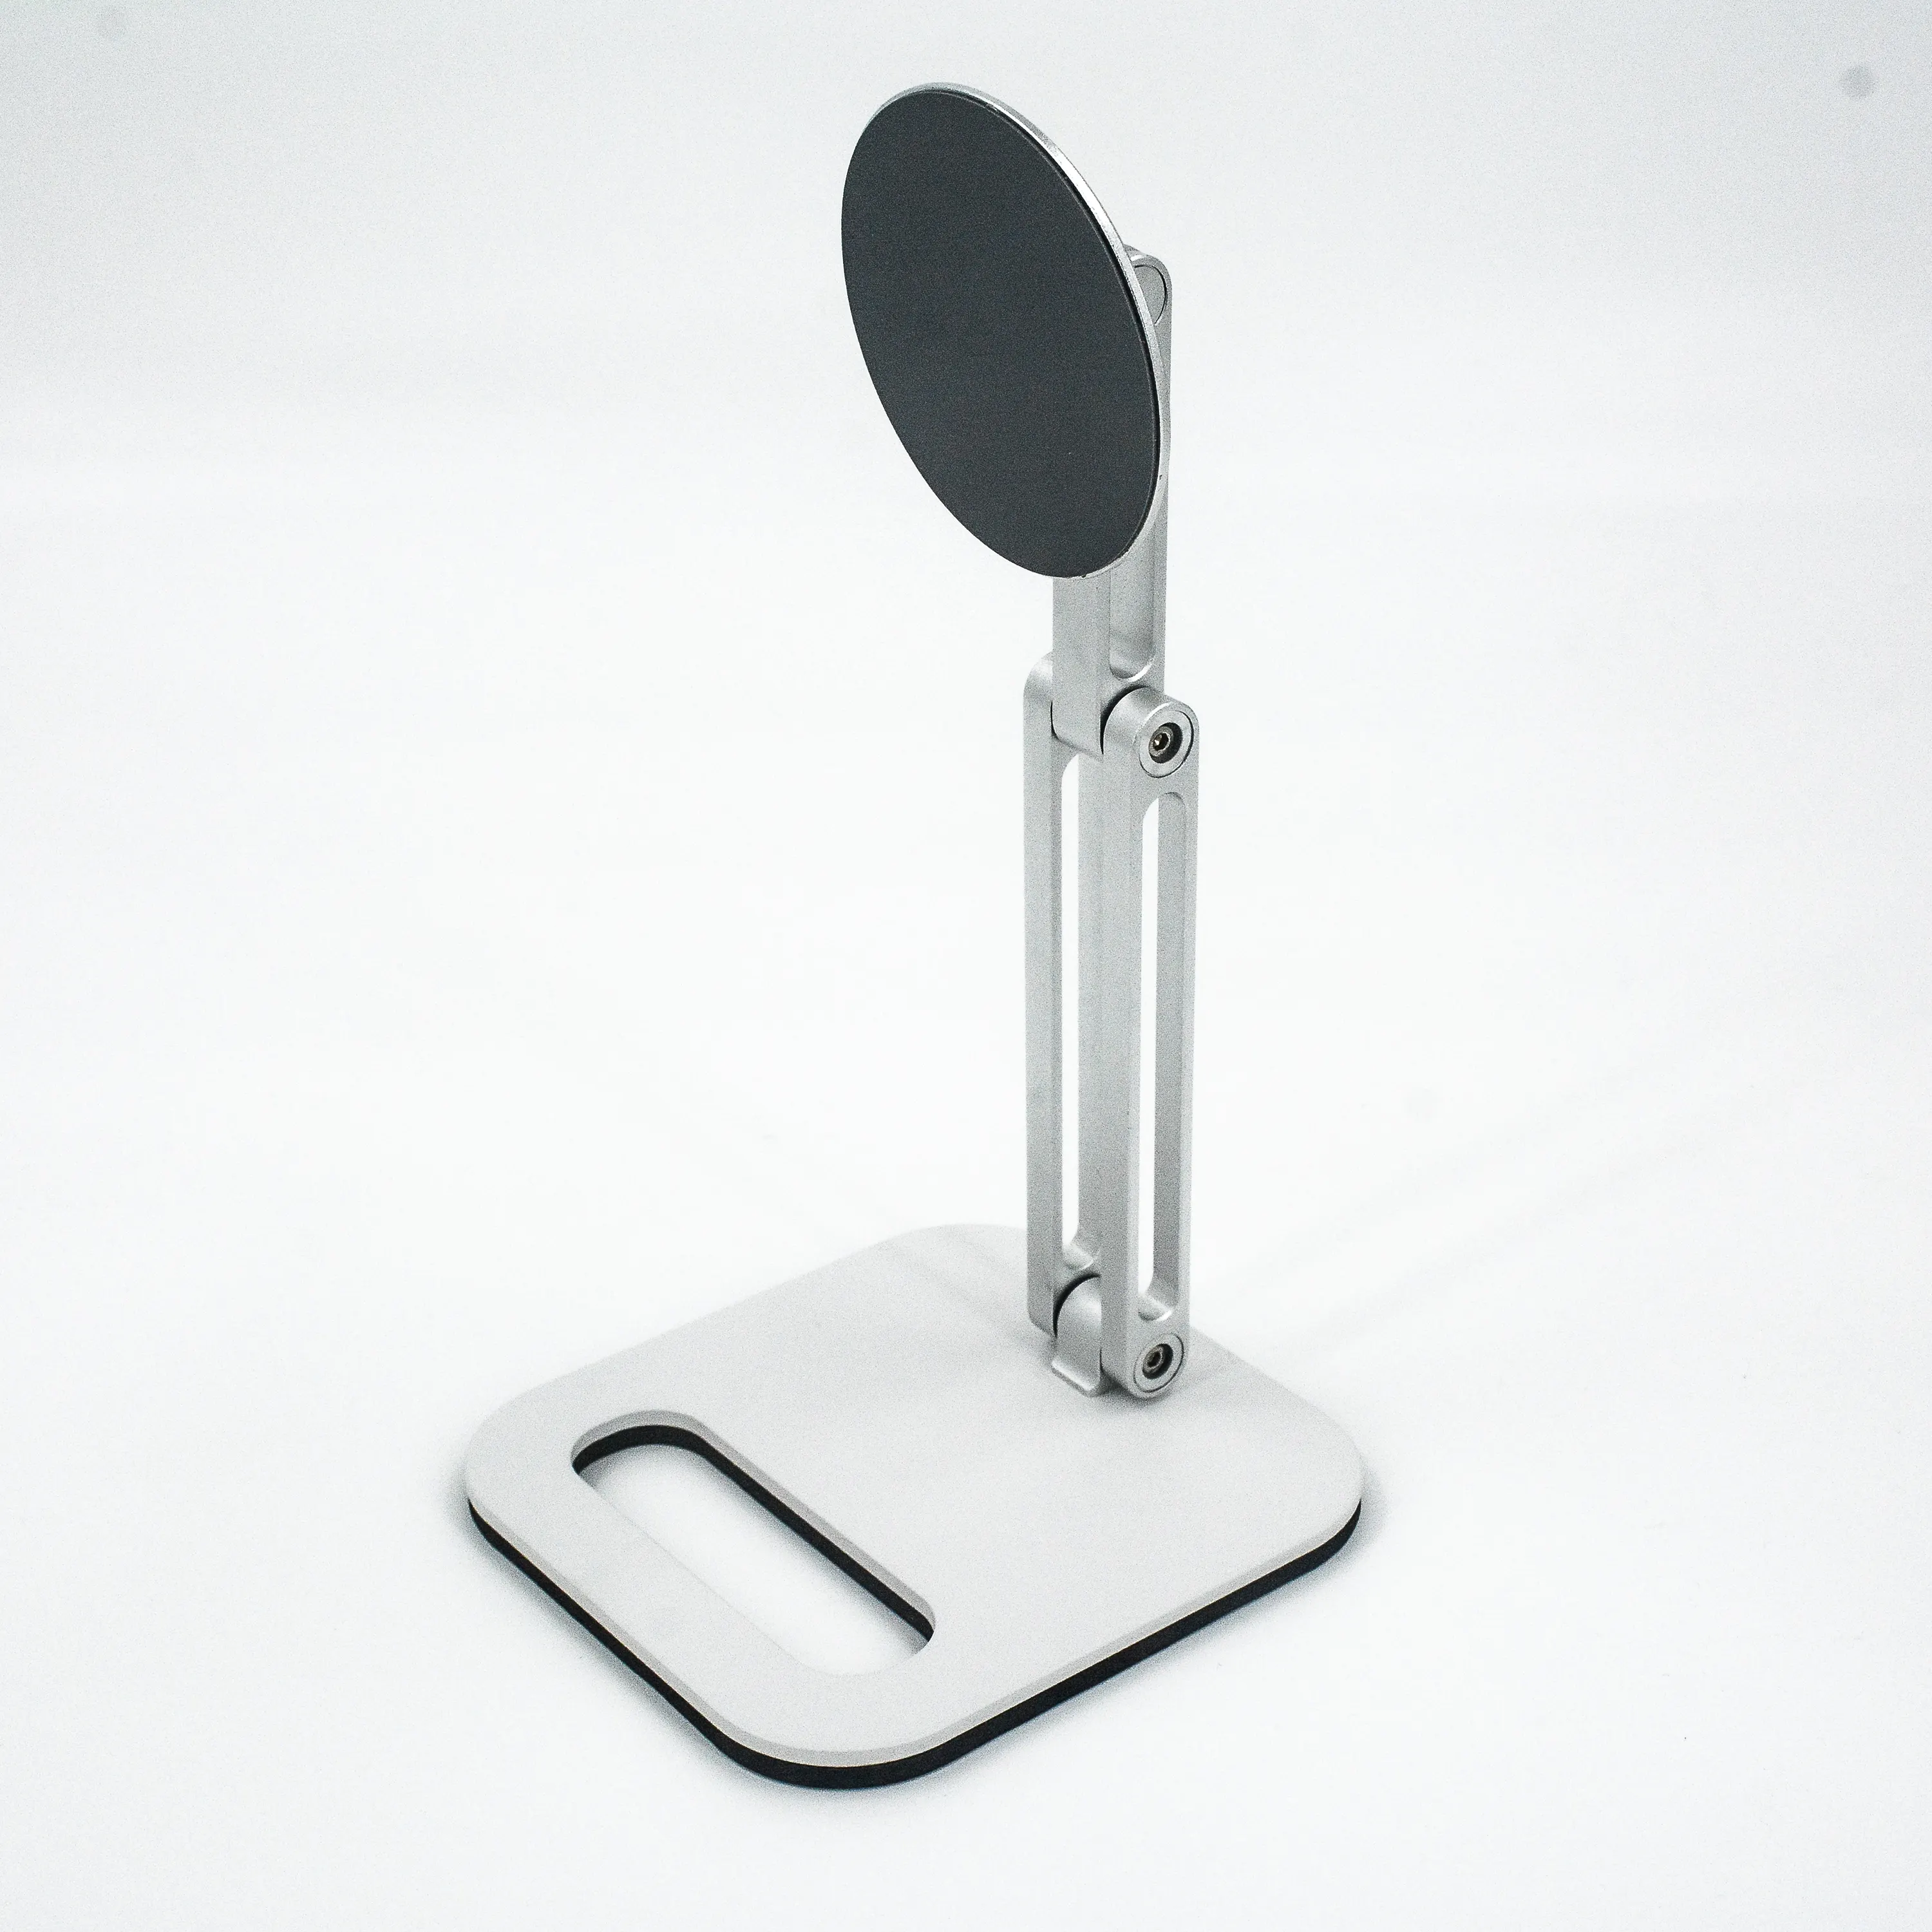 Factory Direct OEM Adjustable Portable Magnetic Stand Compatible with Tablet Mobile Popsocket Phone Holder